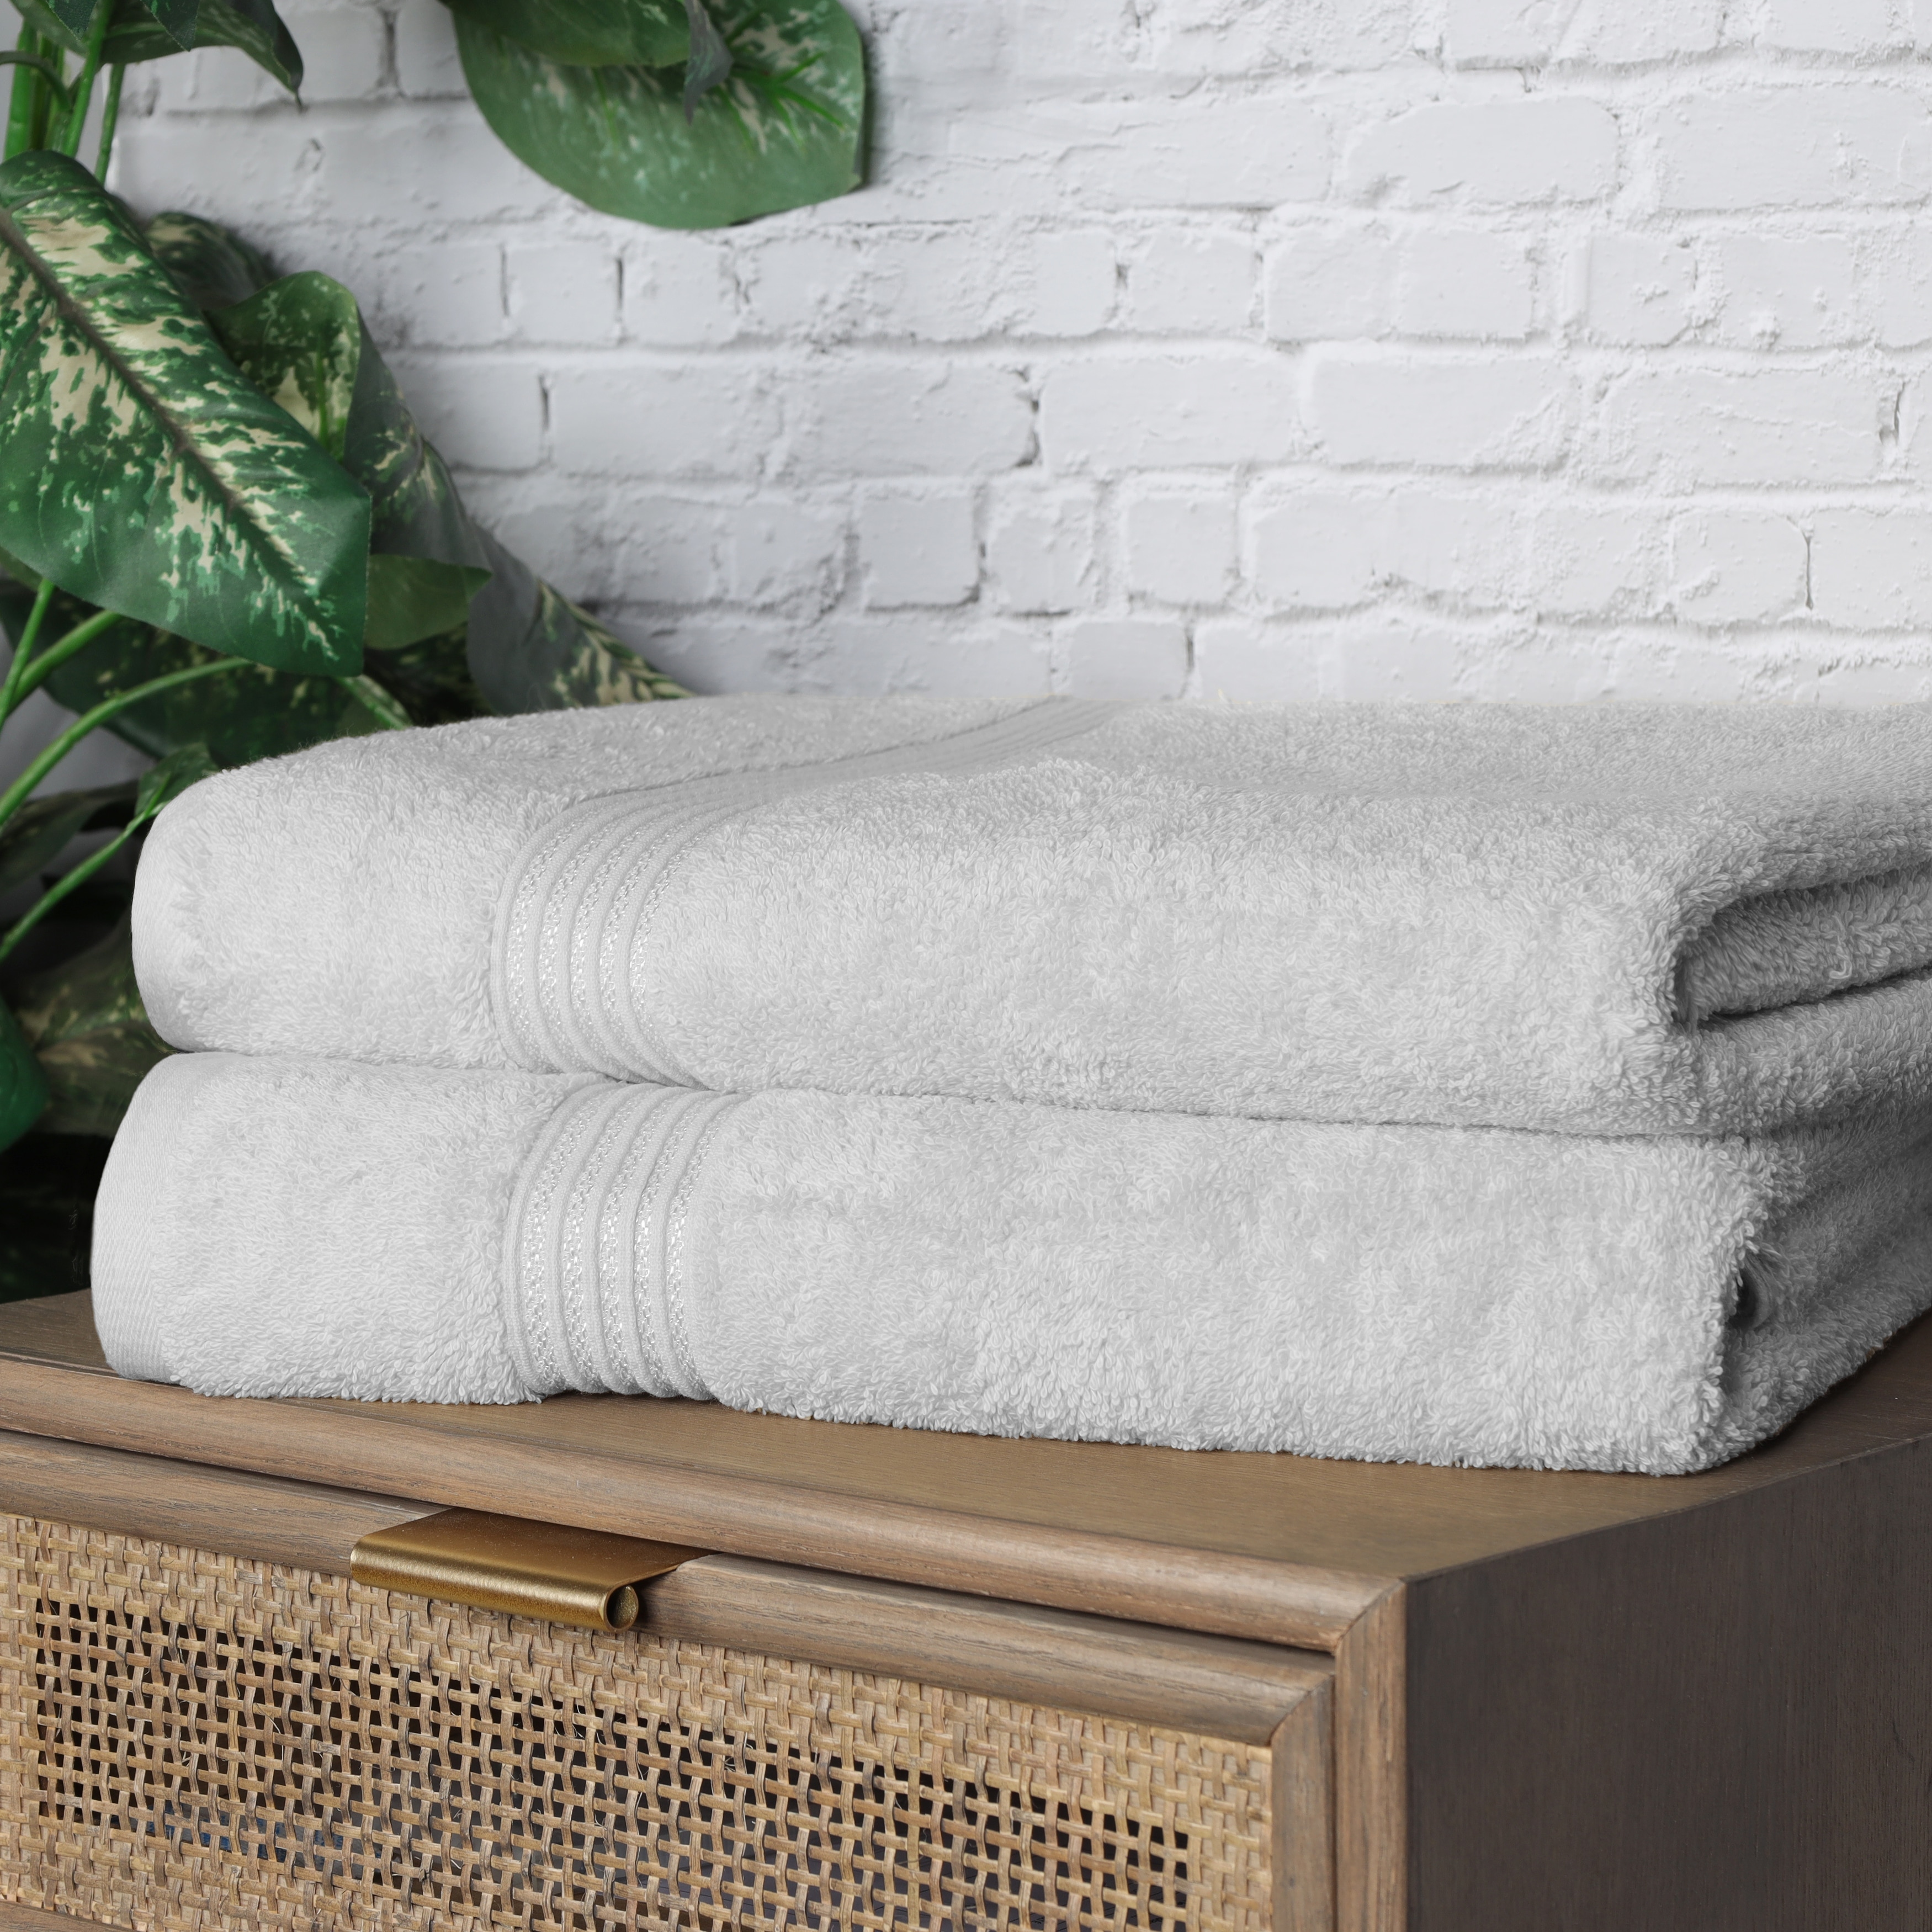 American Soft Linen Bath Sheet 40x80 inch 100% Cotton Extra Large Oversized Bath Towel Sheet - Lemon Yellow, Size: Oversized Bath Sheet 40x80